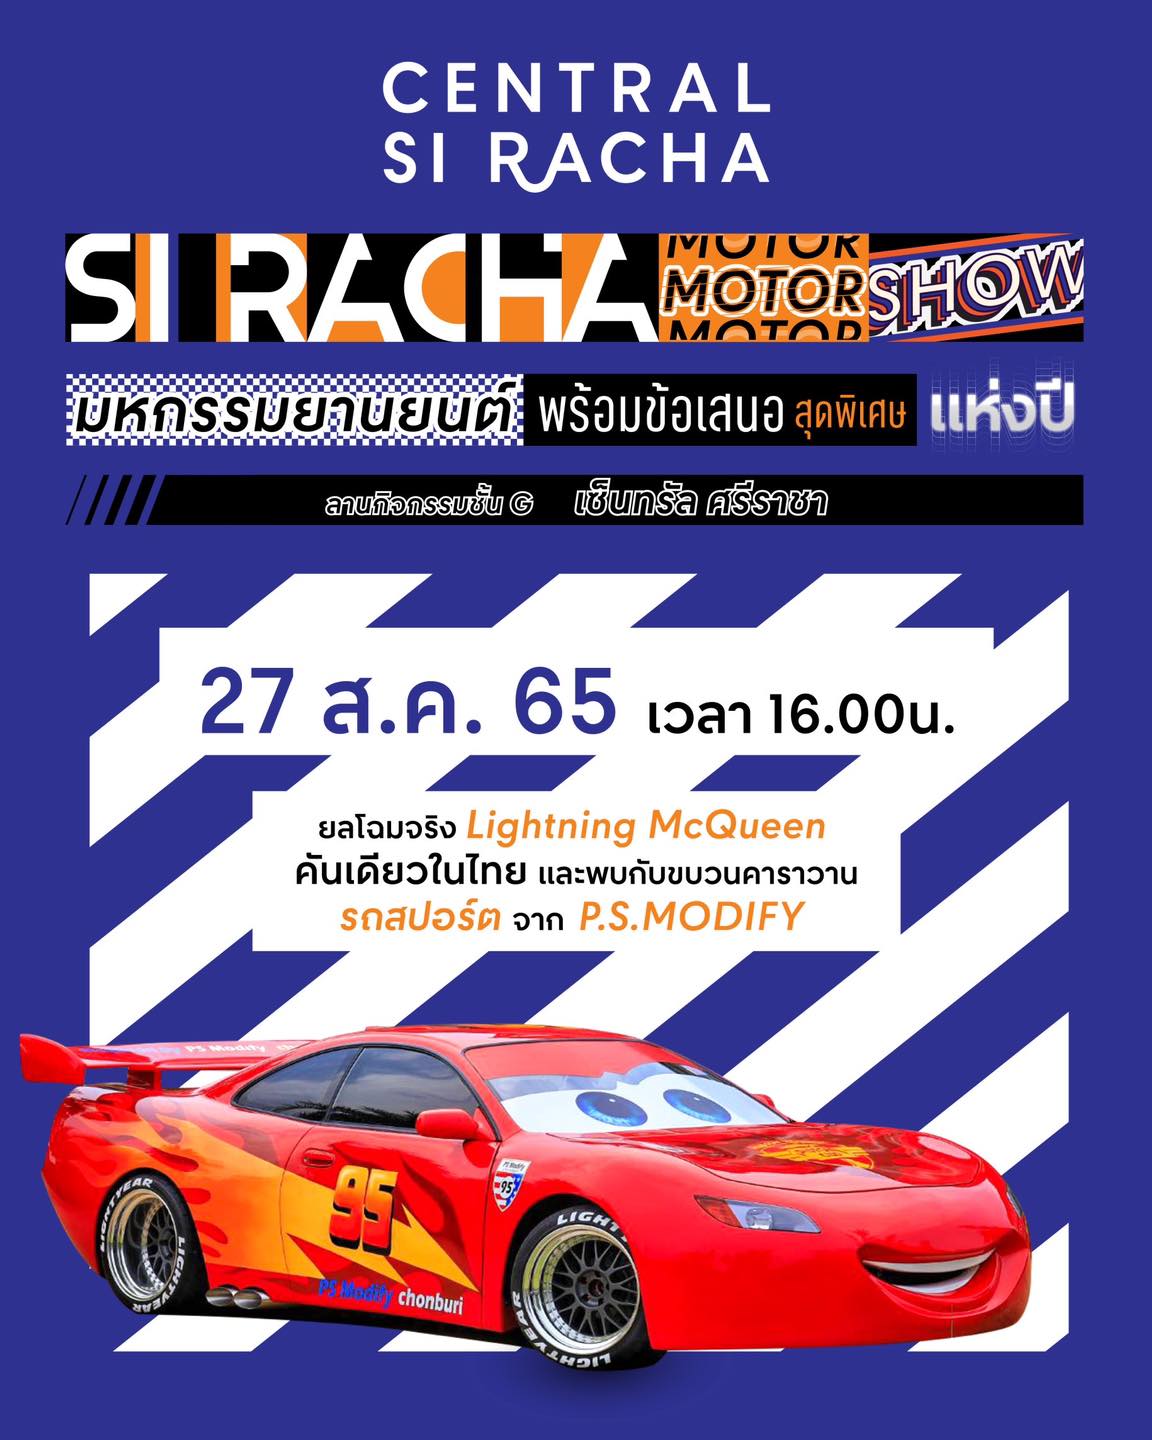 Si Racha Motor Show 2022